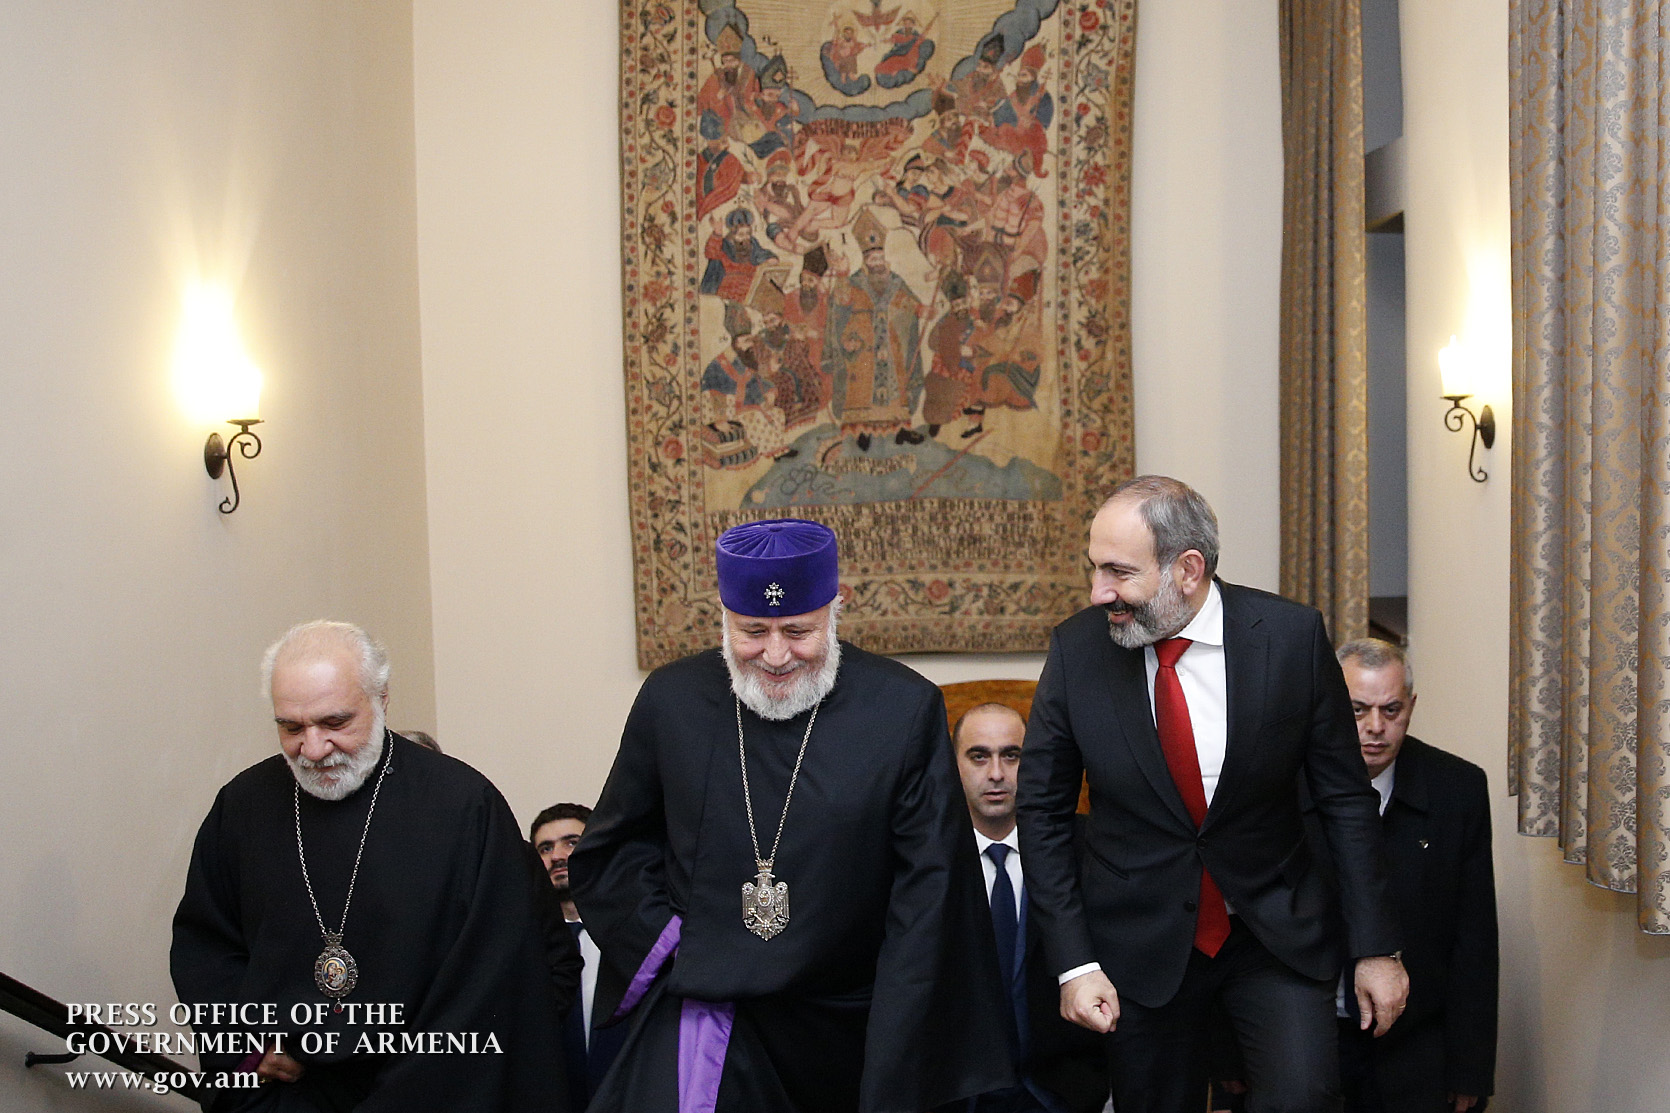 Armenian Church welcomes Pashinyan’s invitation for dialogue